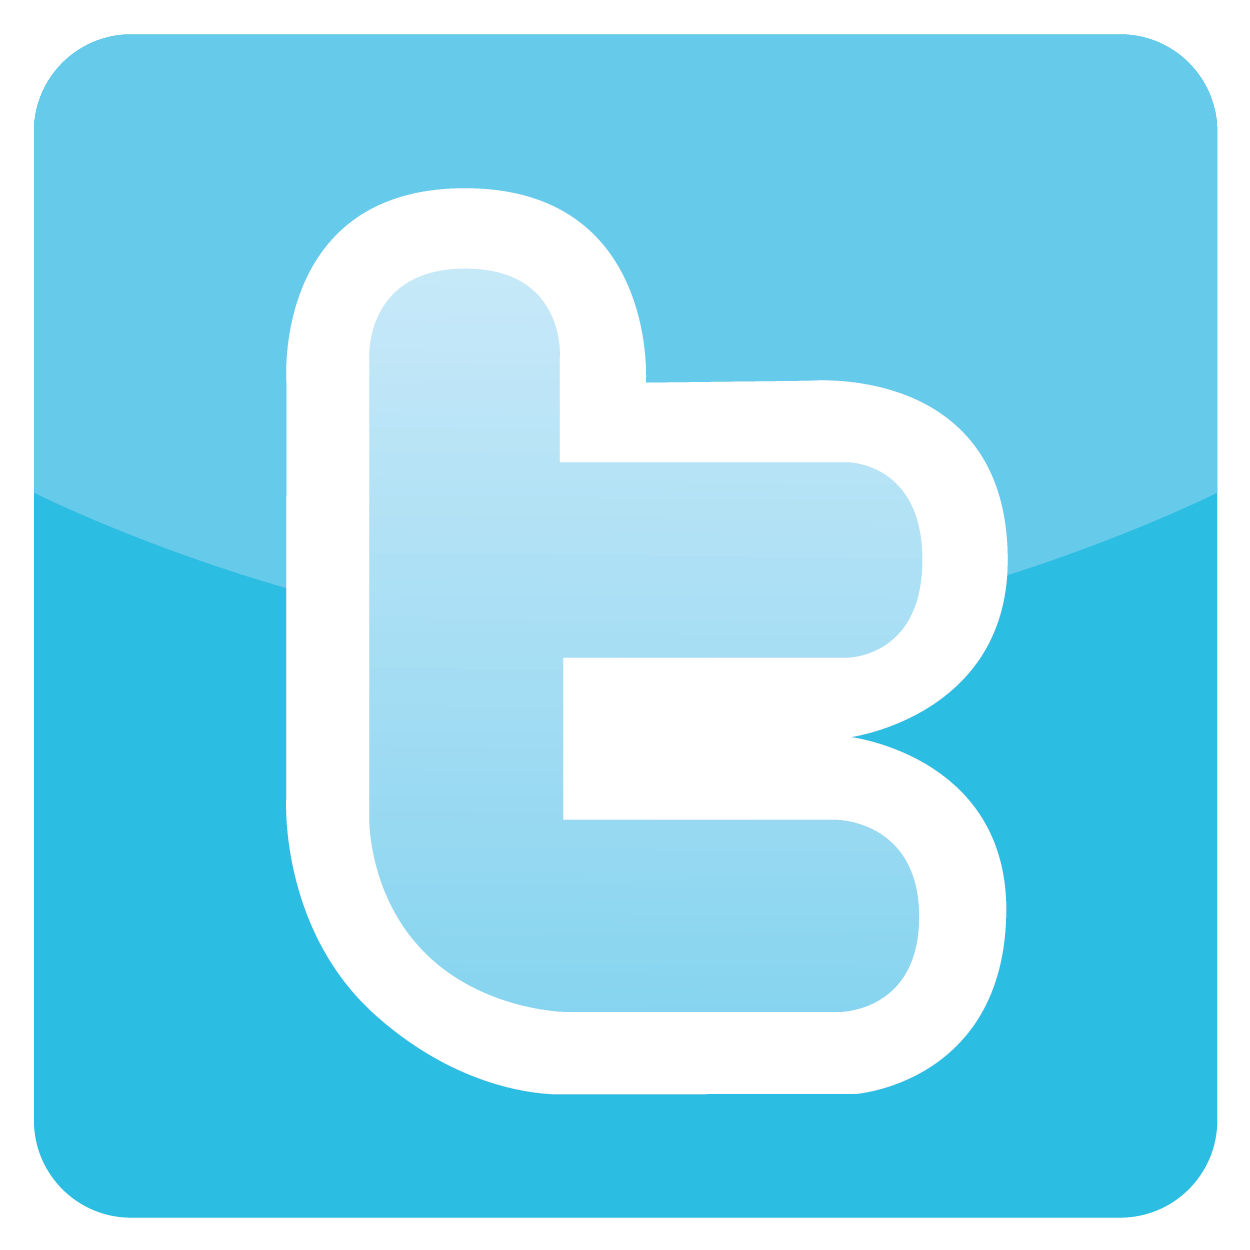 Find Us On Twitter Logo - Twitter logo PNG images free download